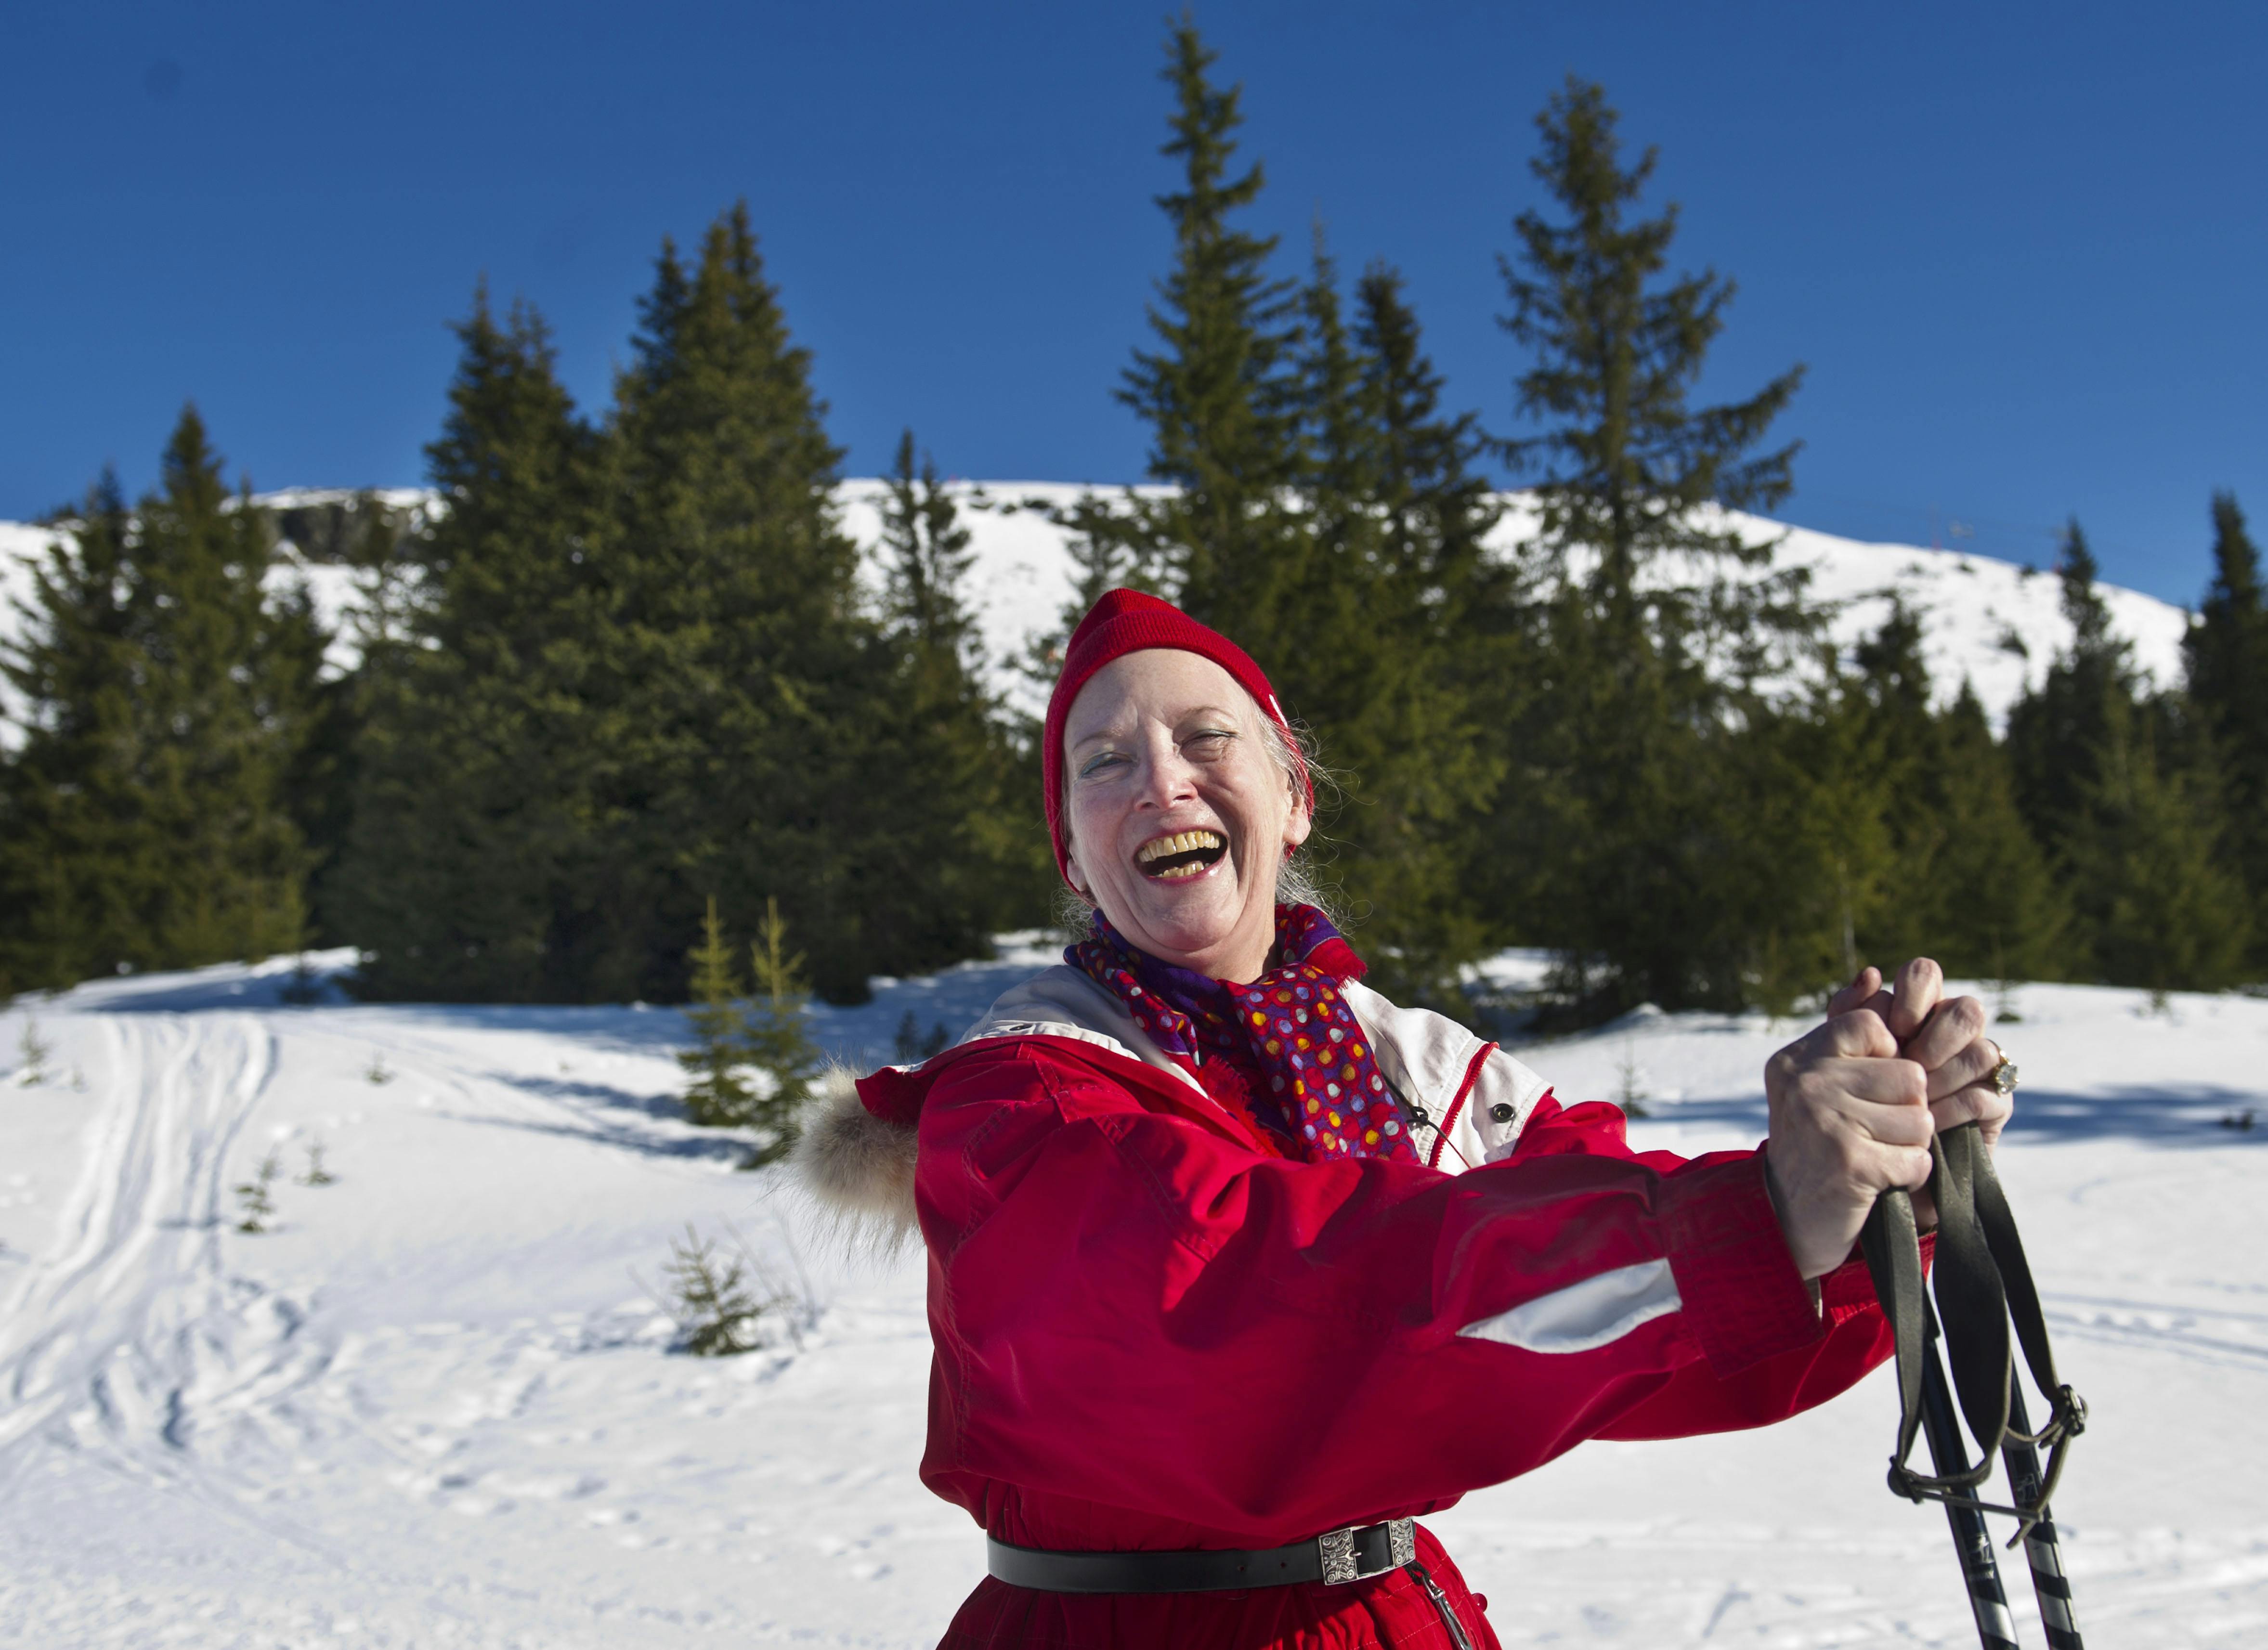 Tidligere stod Margrethe på ski i Norge, men skavankerne har sat en stopper for det.